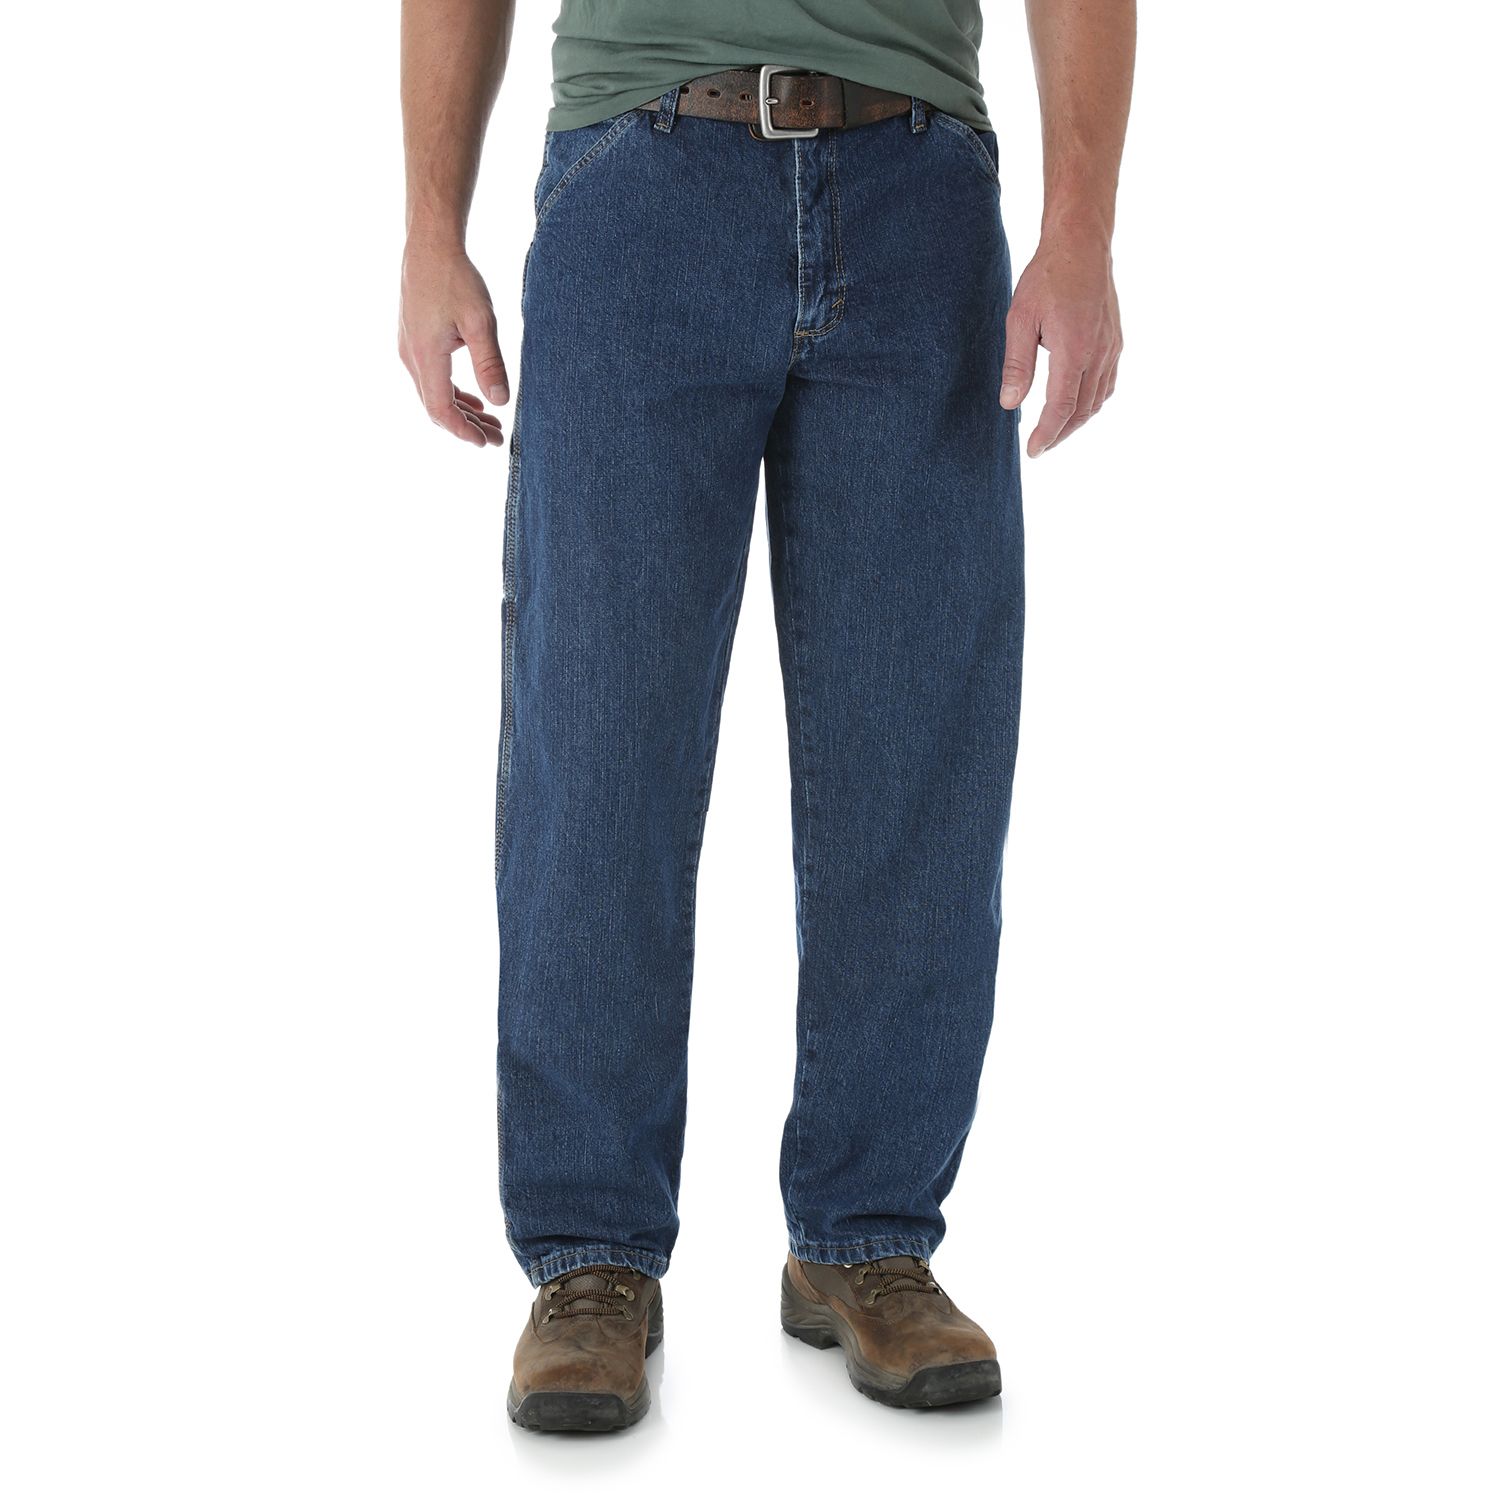 wrangler carpenter jeans big and tall